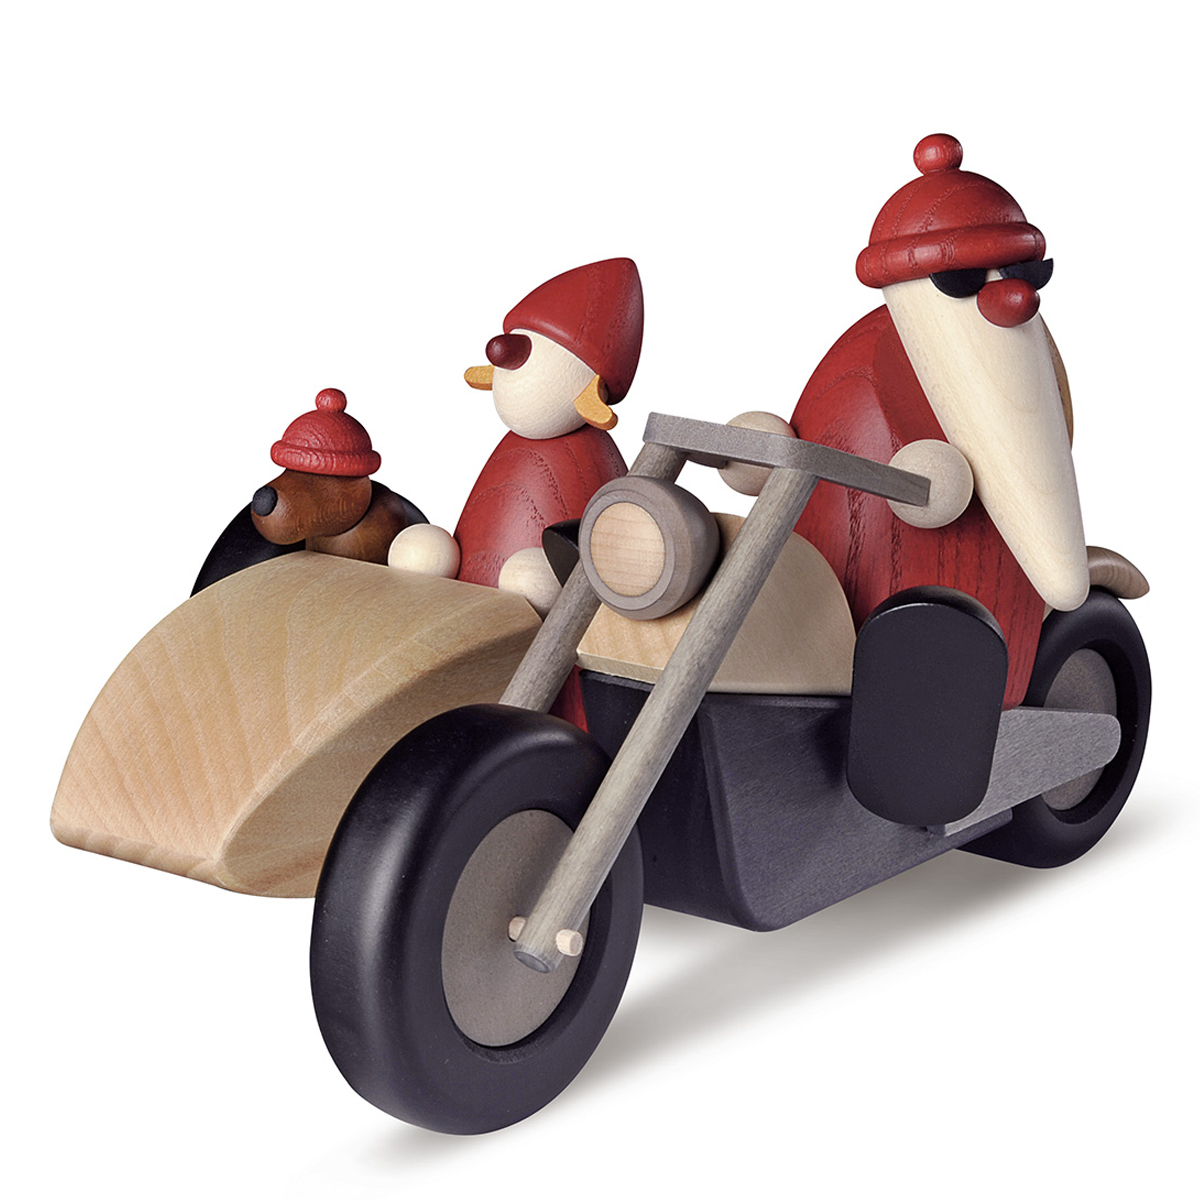 The Santa Claus Family Motorbike Trip, christmasy